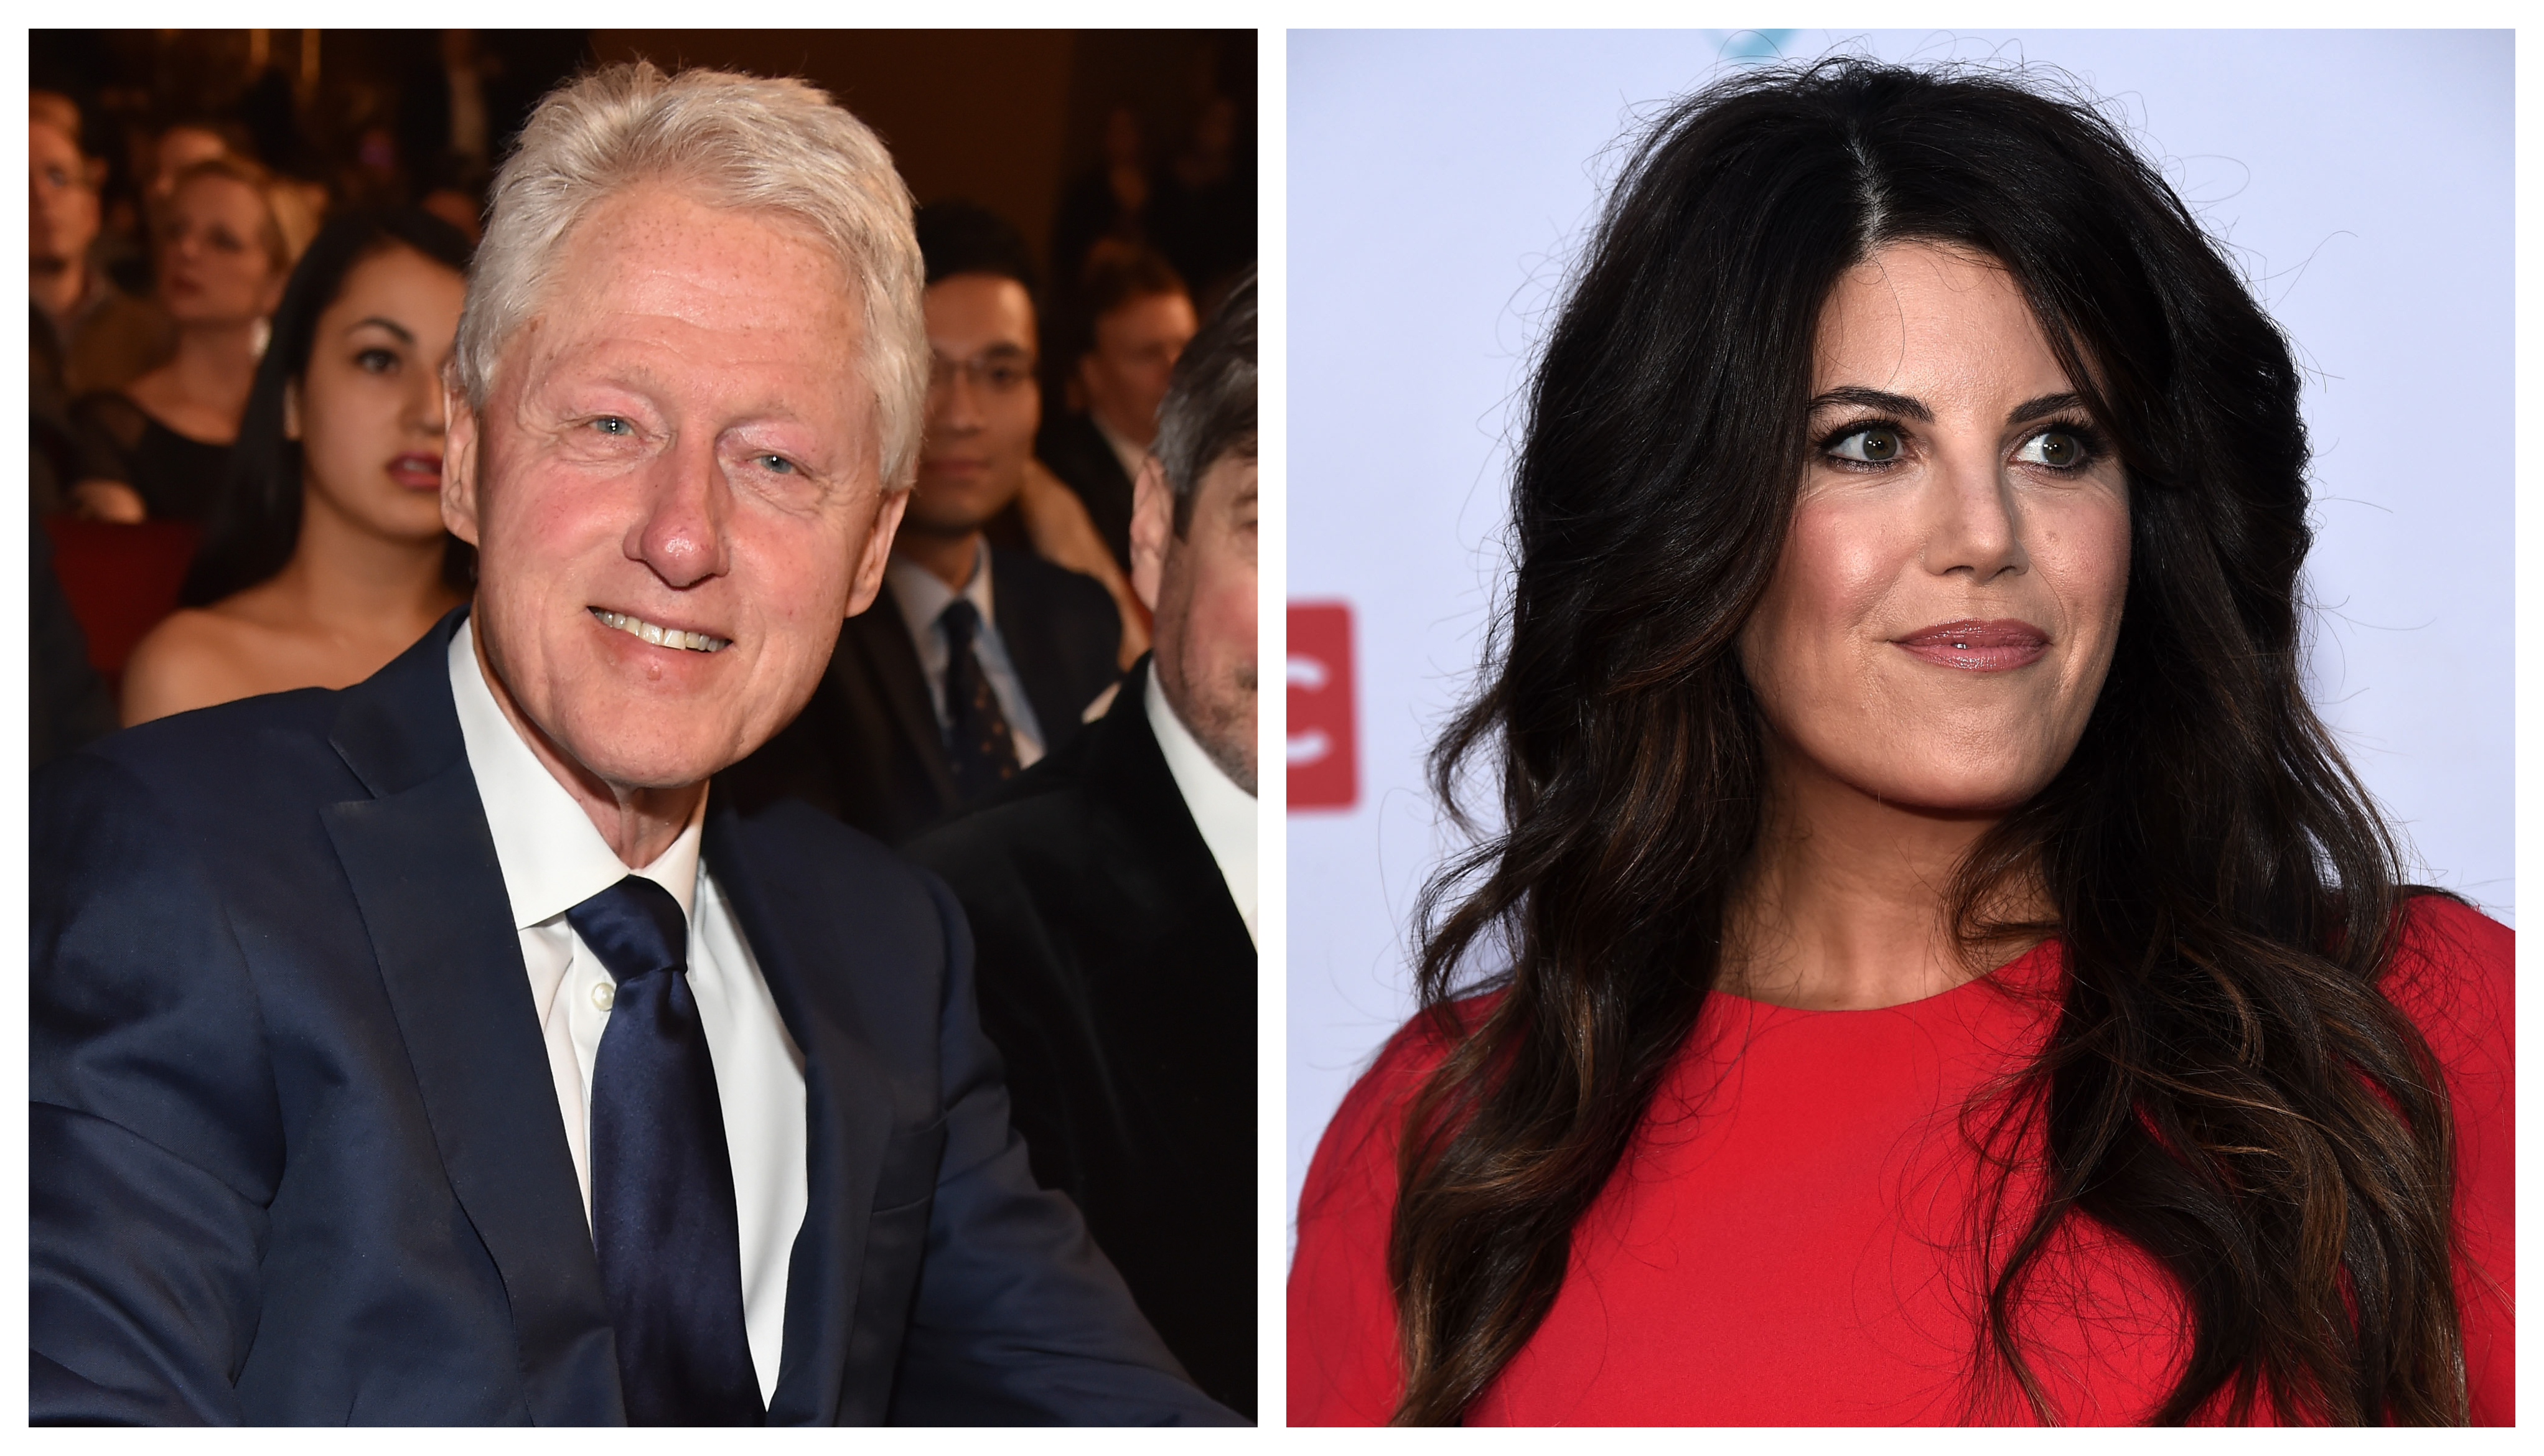 Bill Clinton Has Never Apologized to Monica Lewinsky for Their Affair